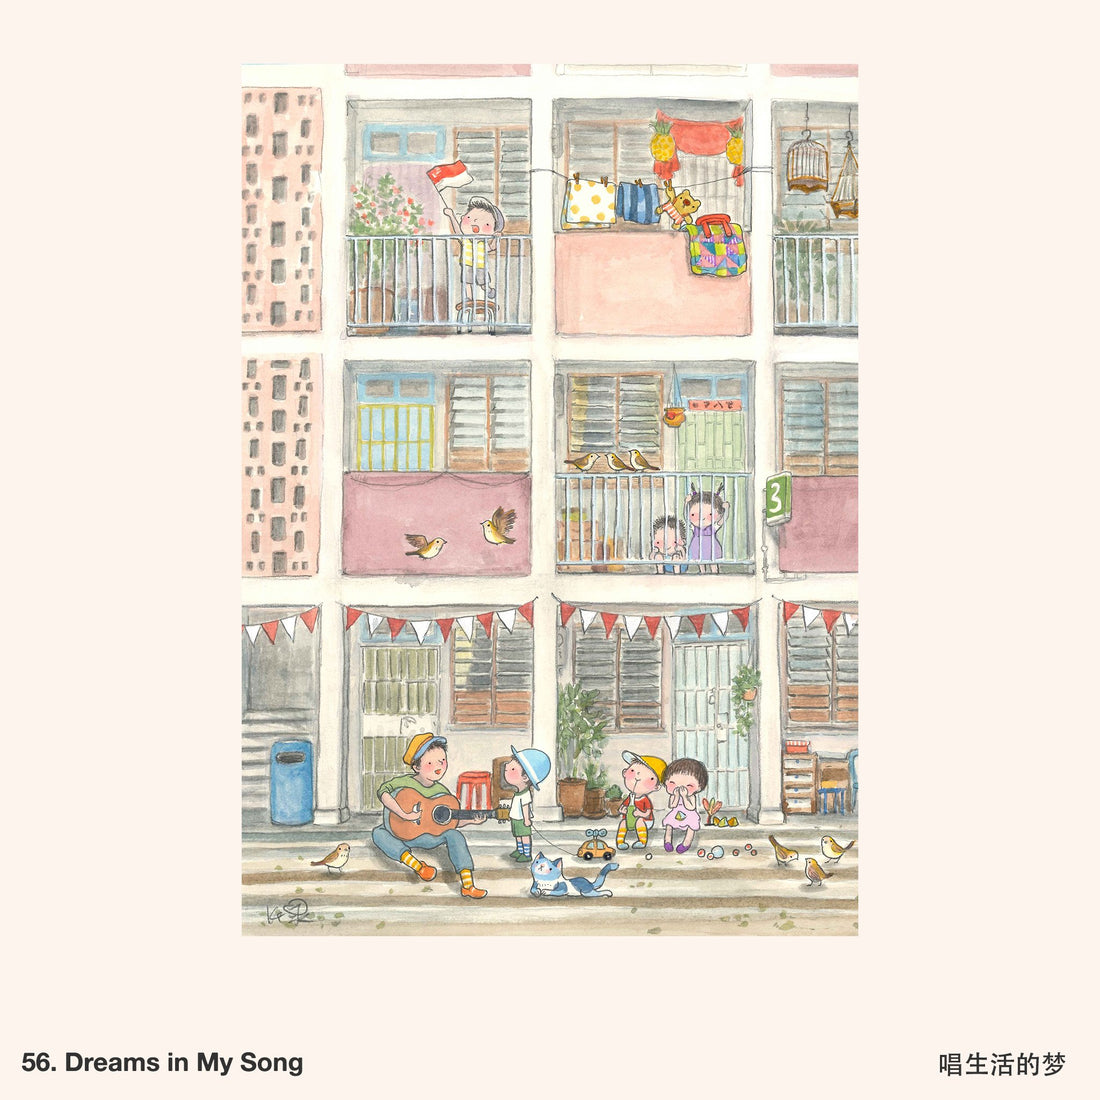 Ah Guo Cushion Cover [More Designs]